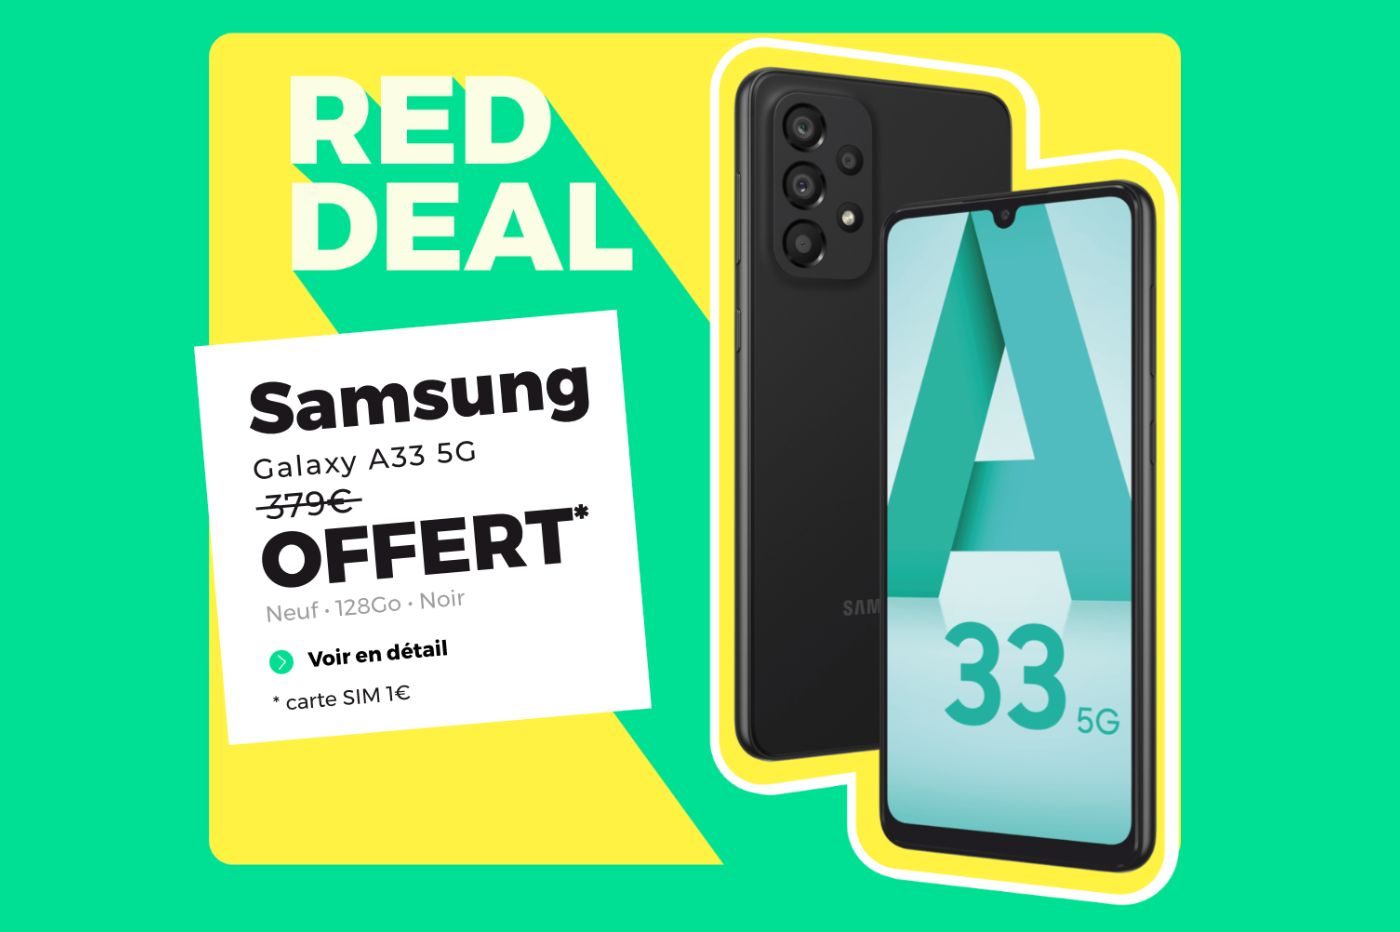 RED Deal Samsung Galaxy A33 5G